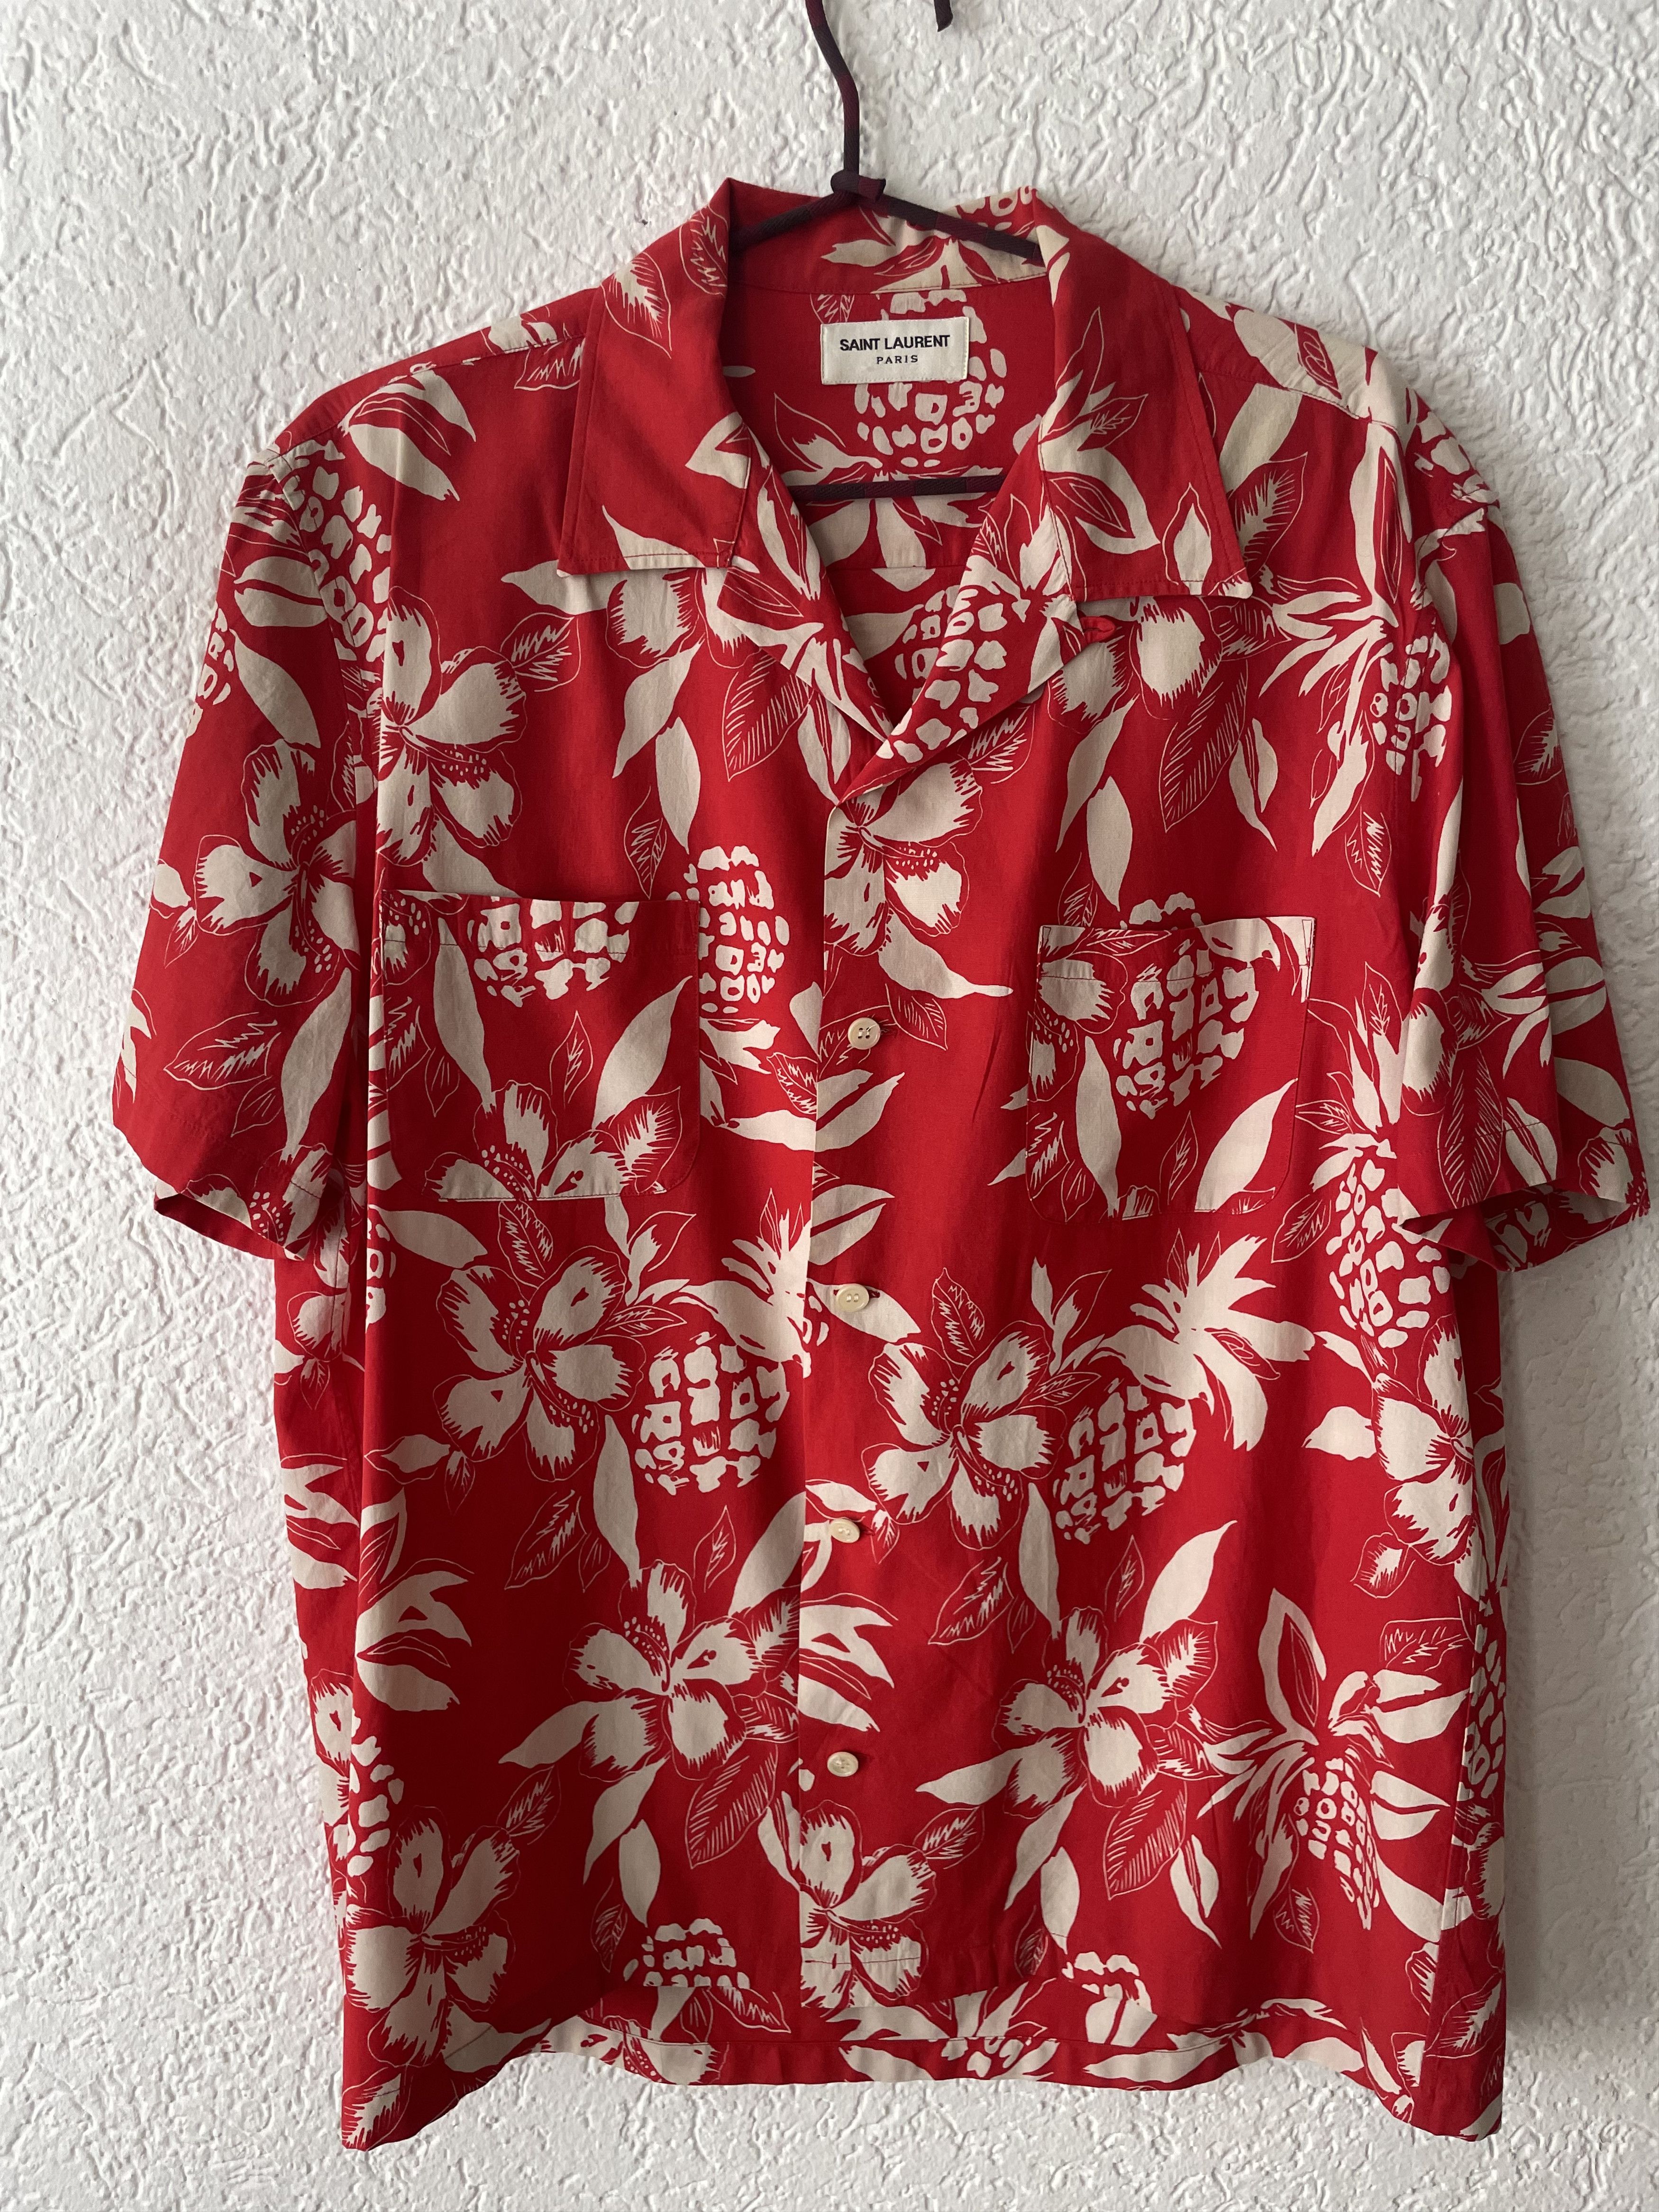 Saint Laurent Paris Saint Laurent Hawaiian shirt | Grailed